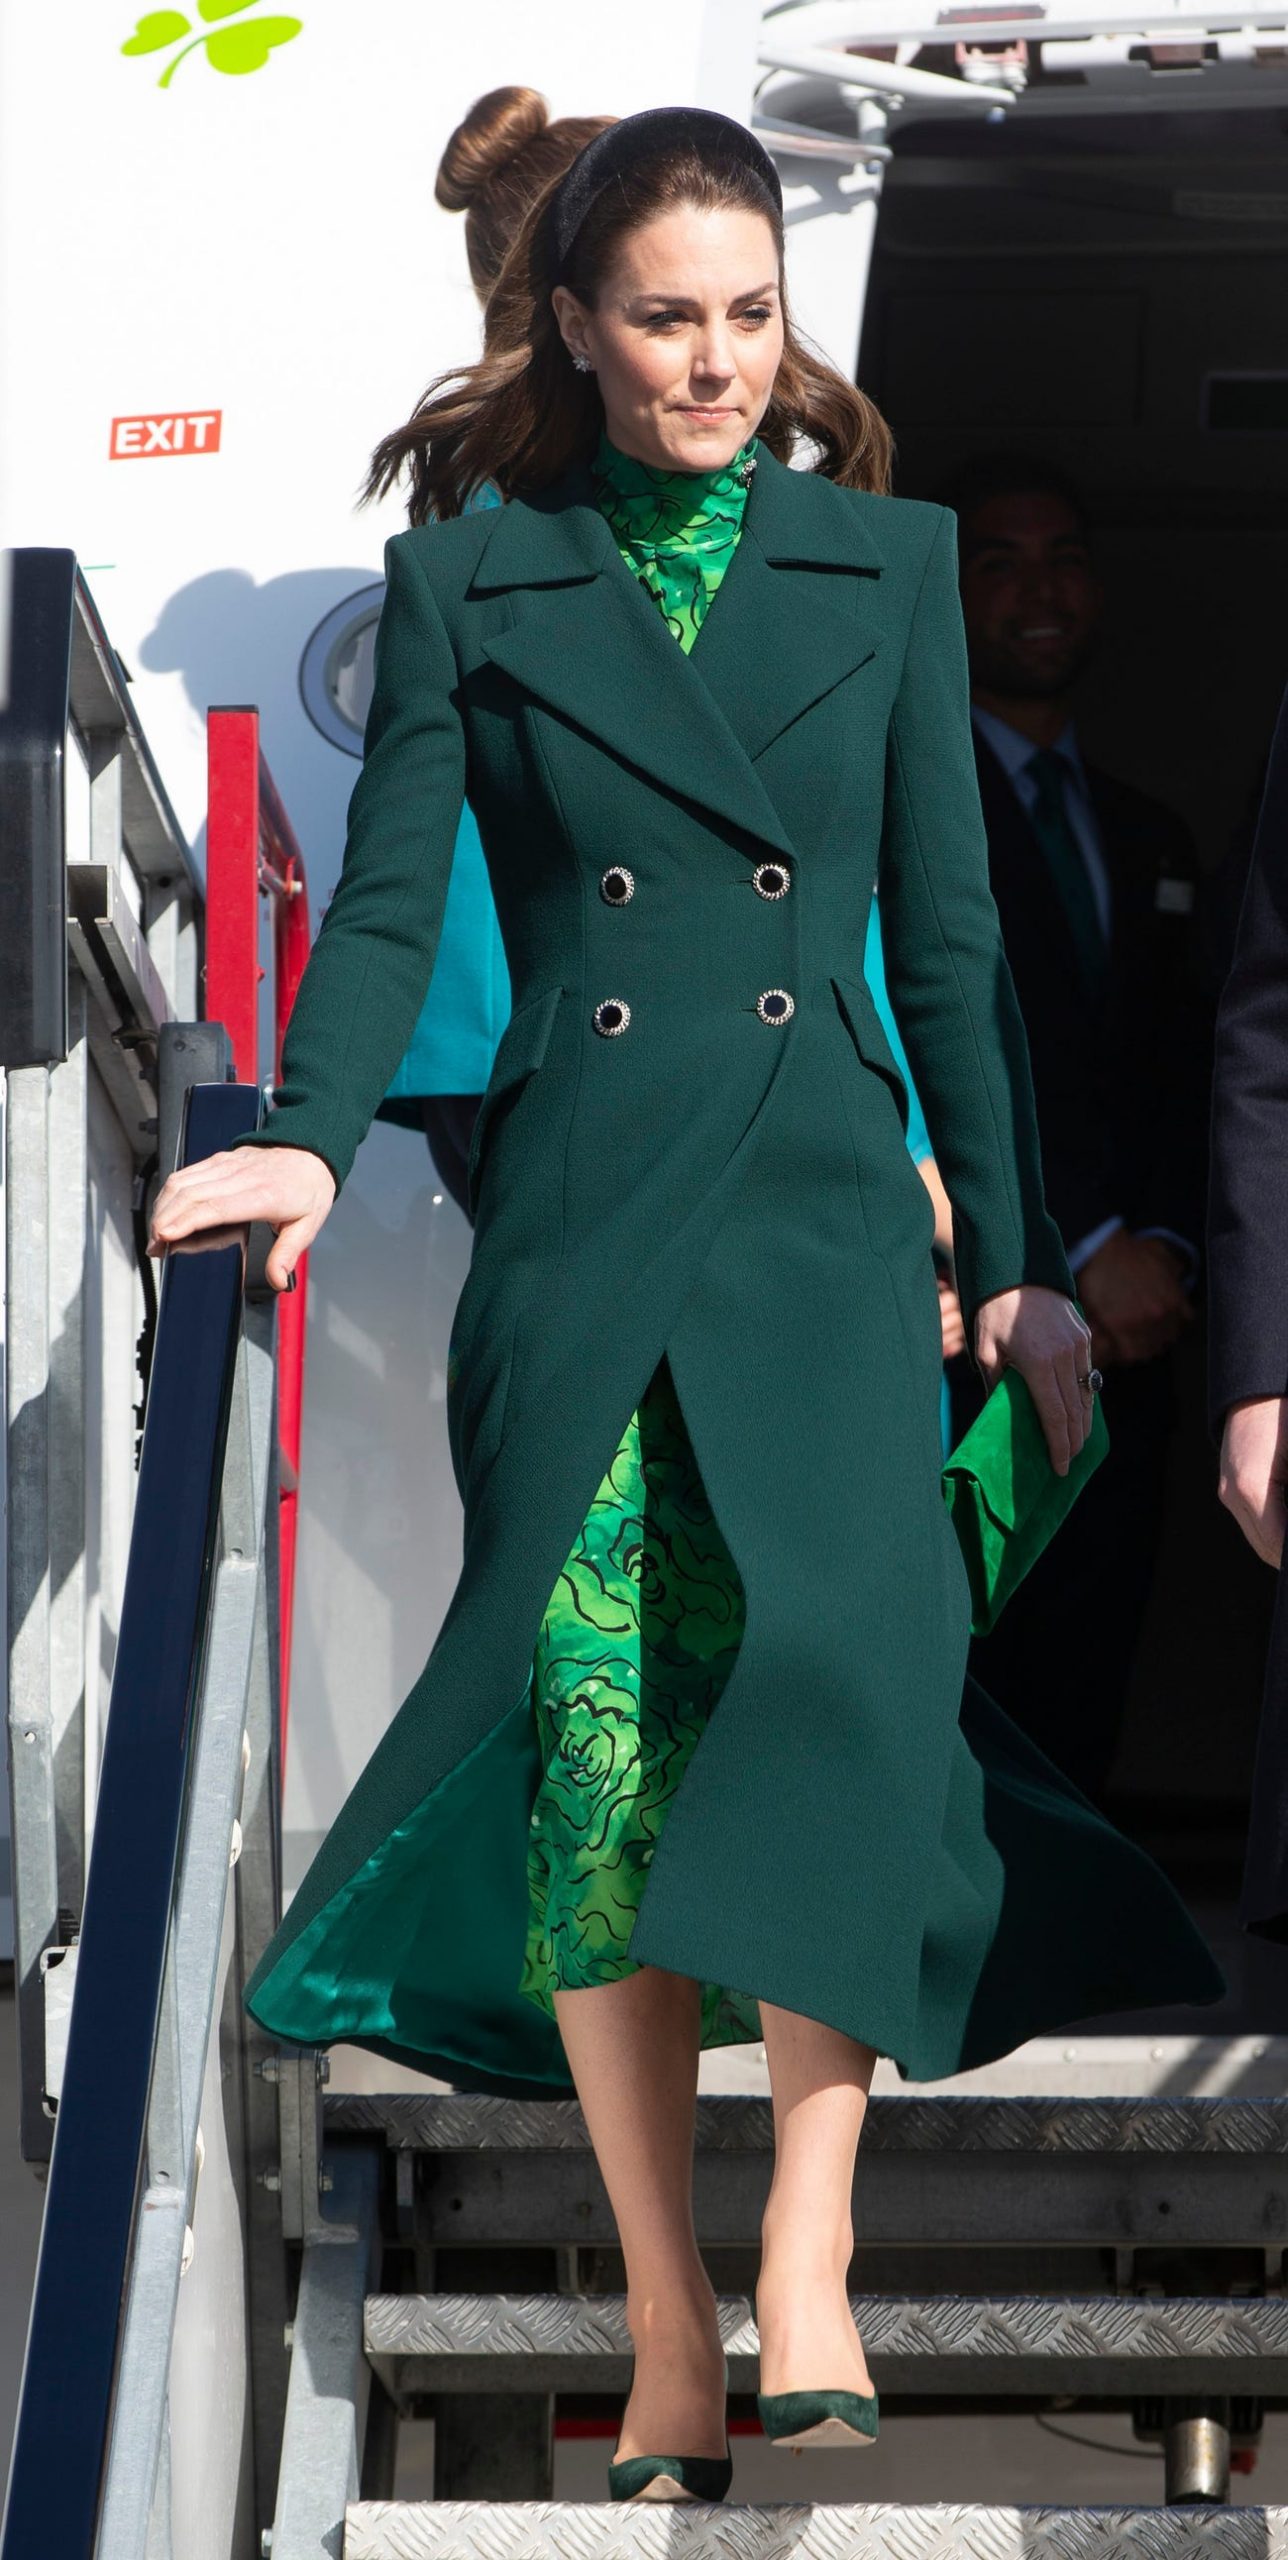 Middleton wore a green coat while touring Ireland.